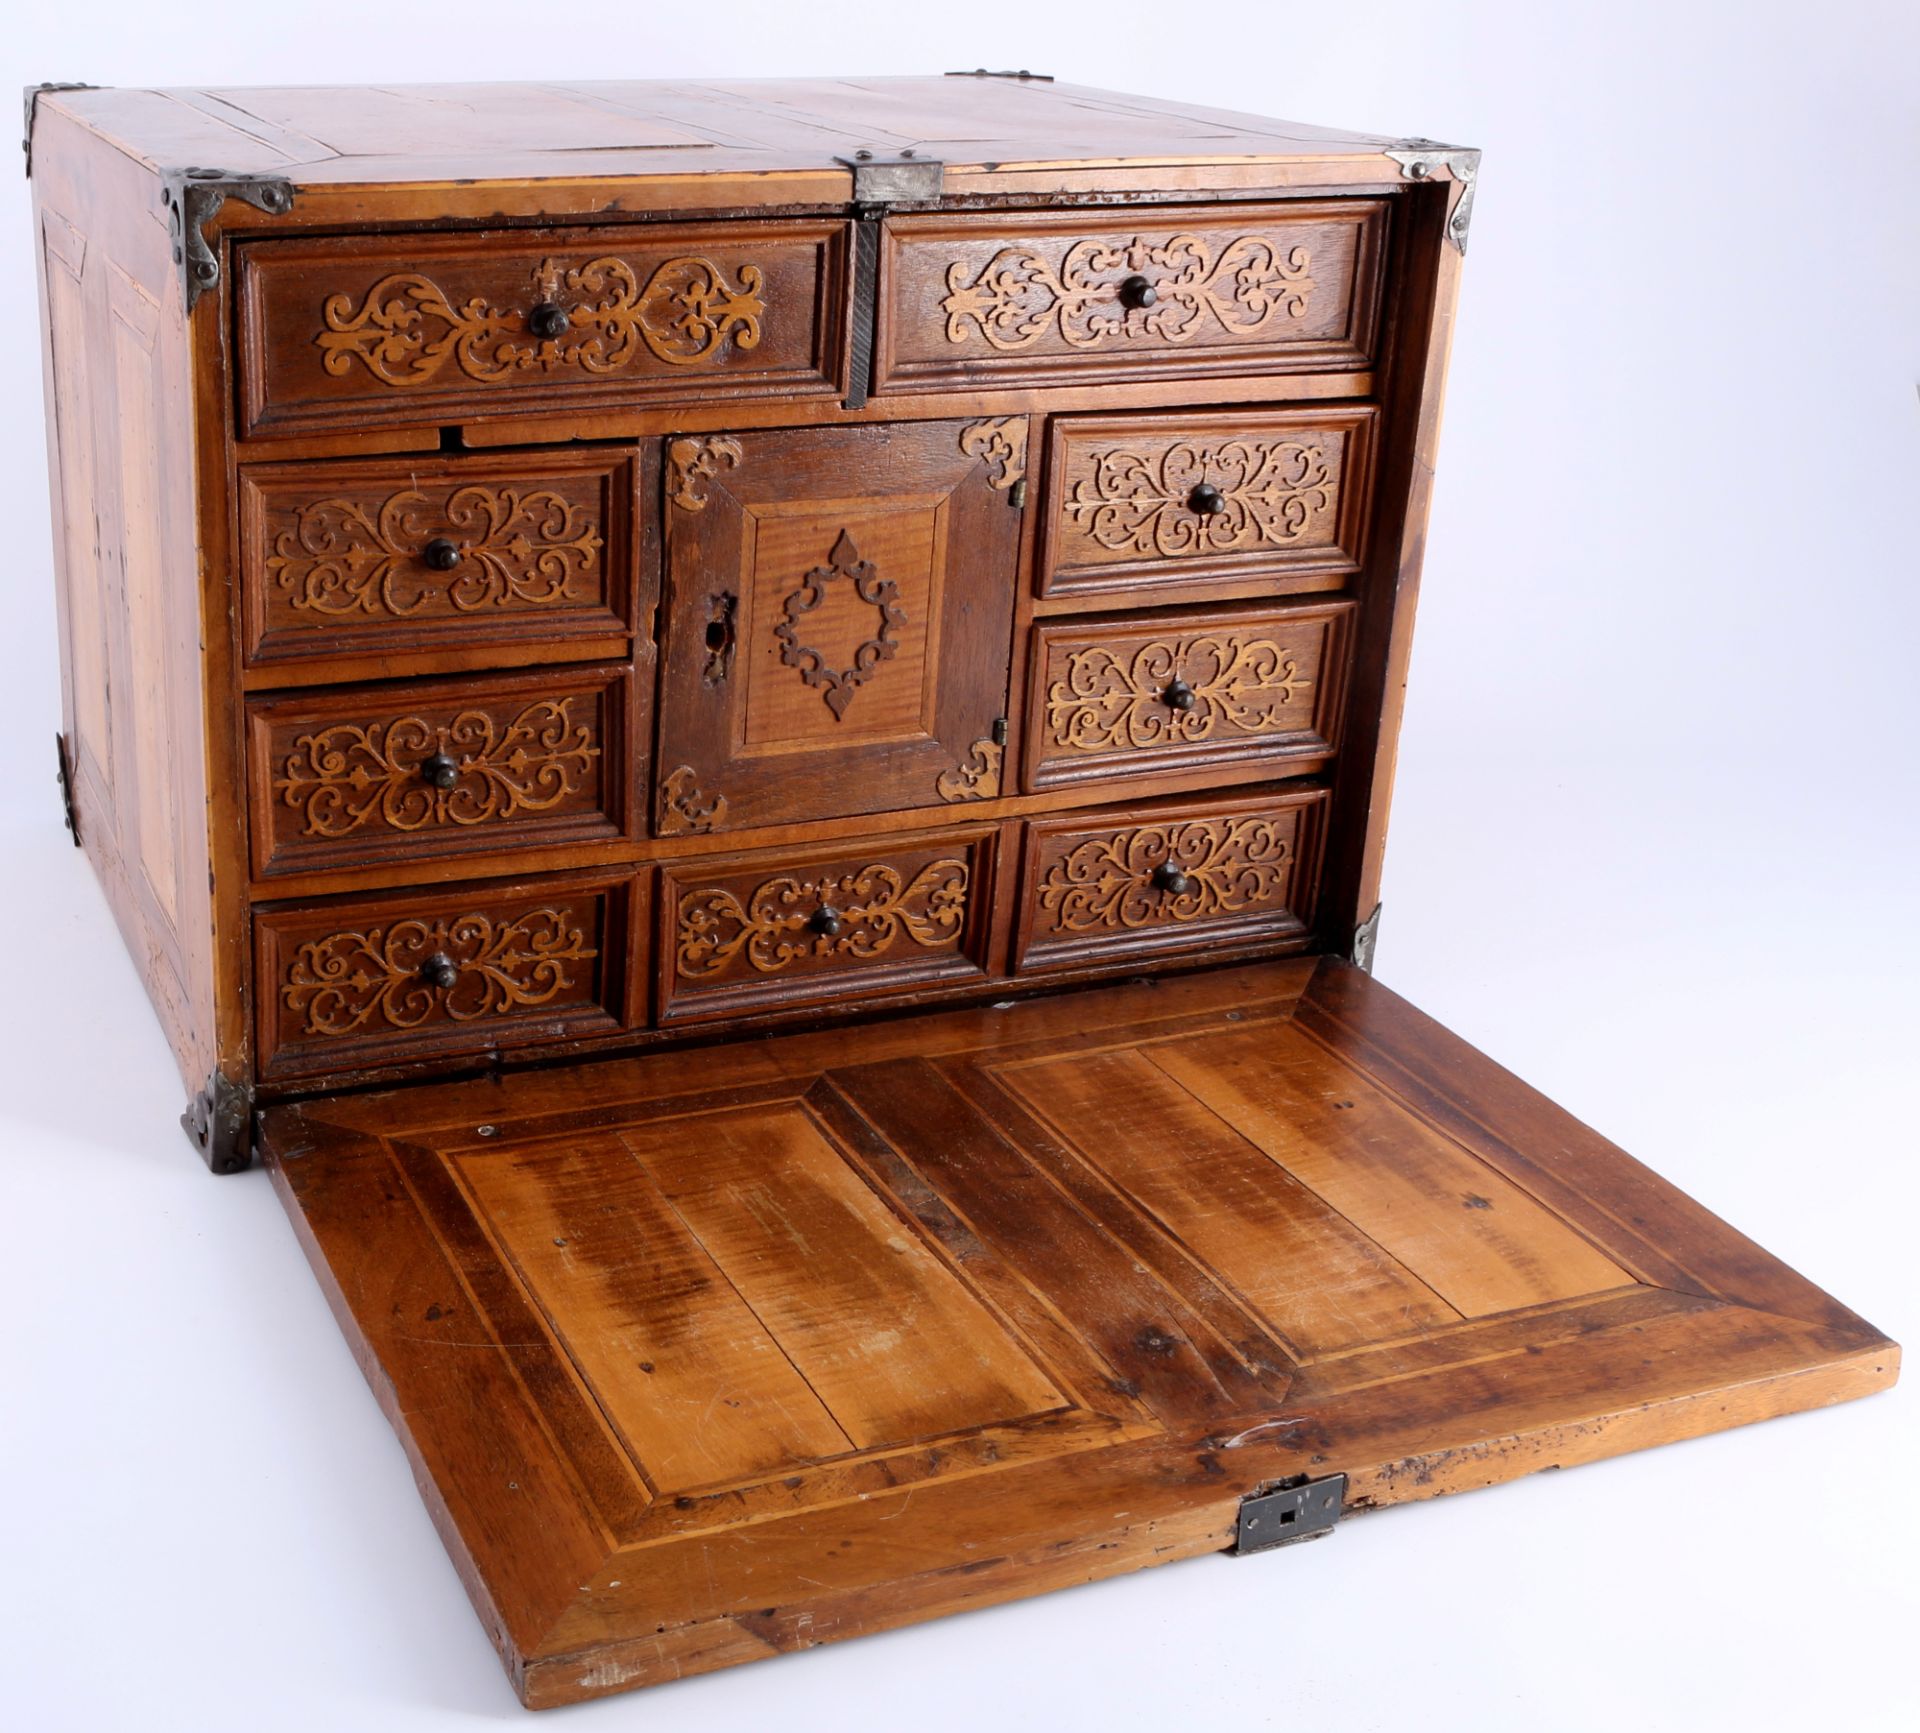 Kabinettschrank 19. Jahrhundert, wooden cabinet 19th century,